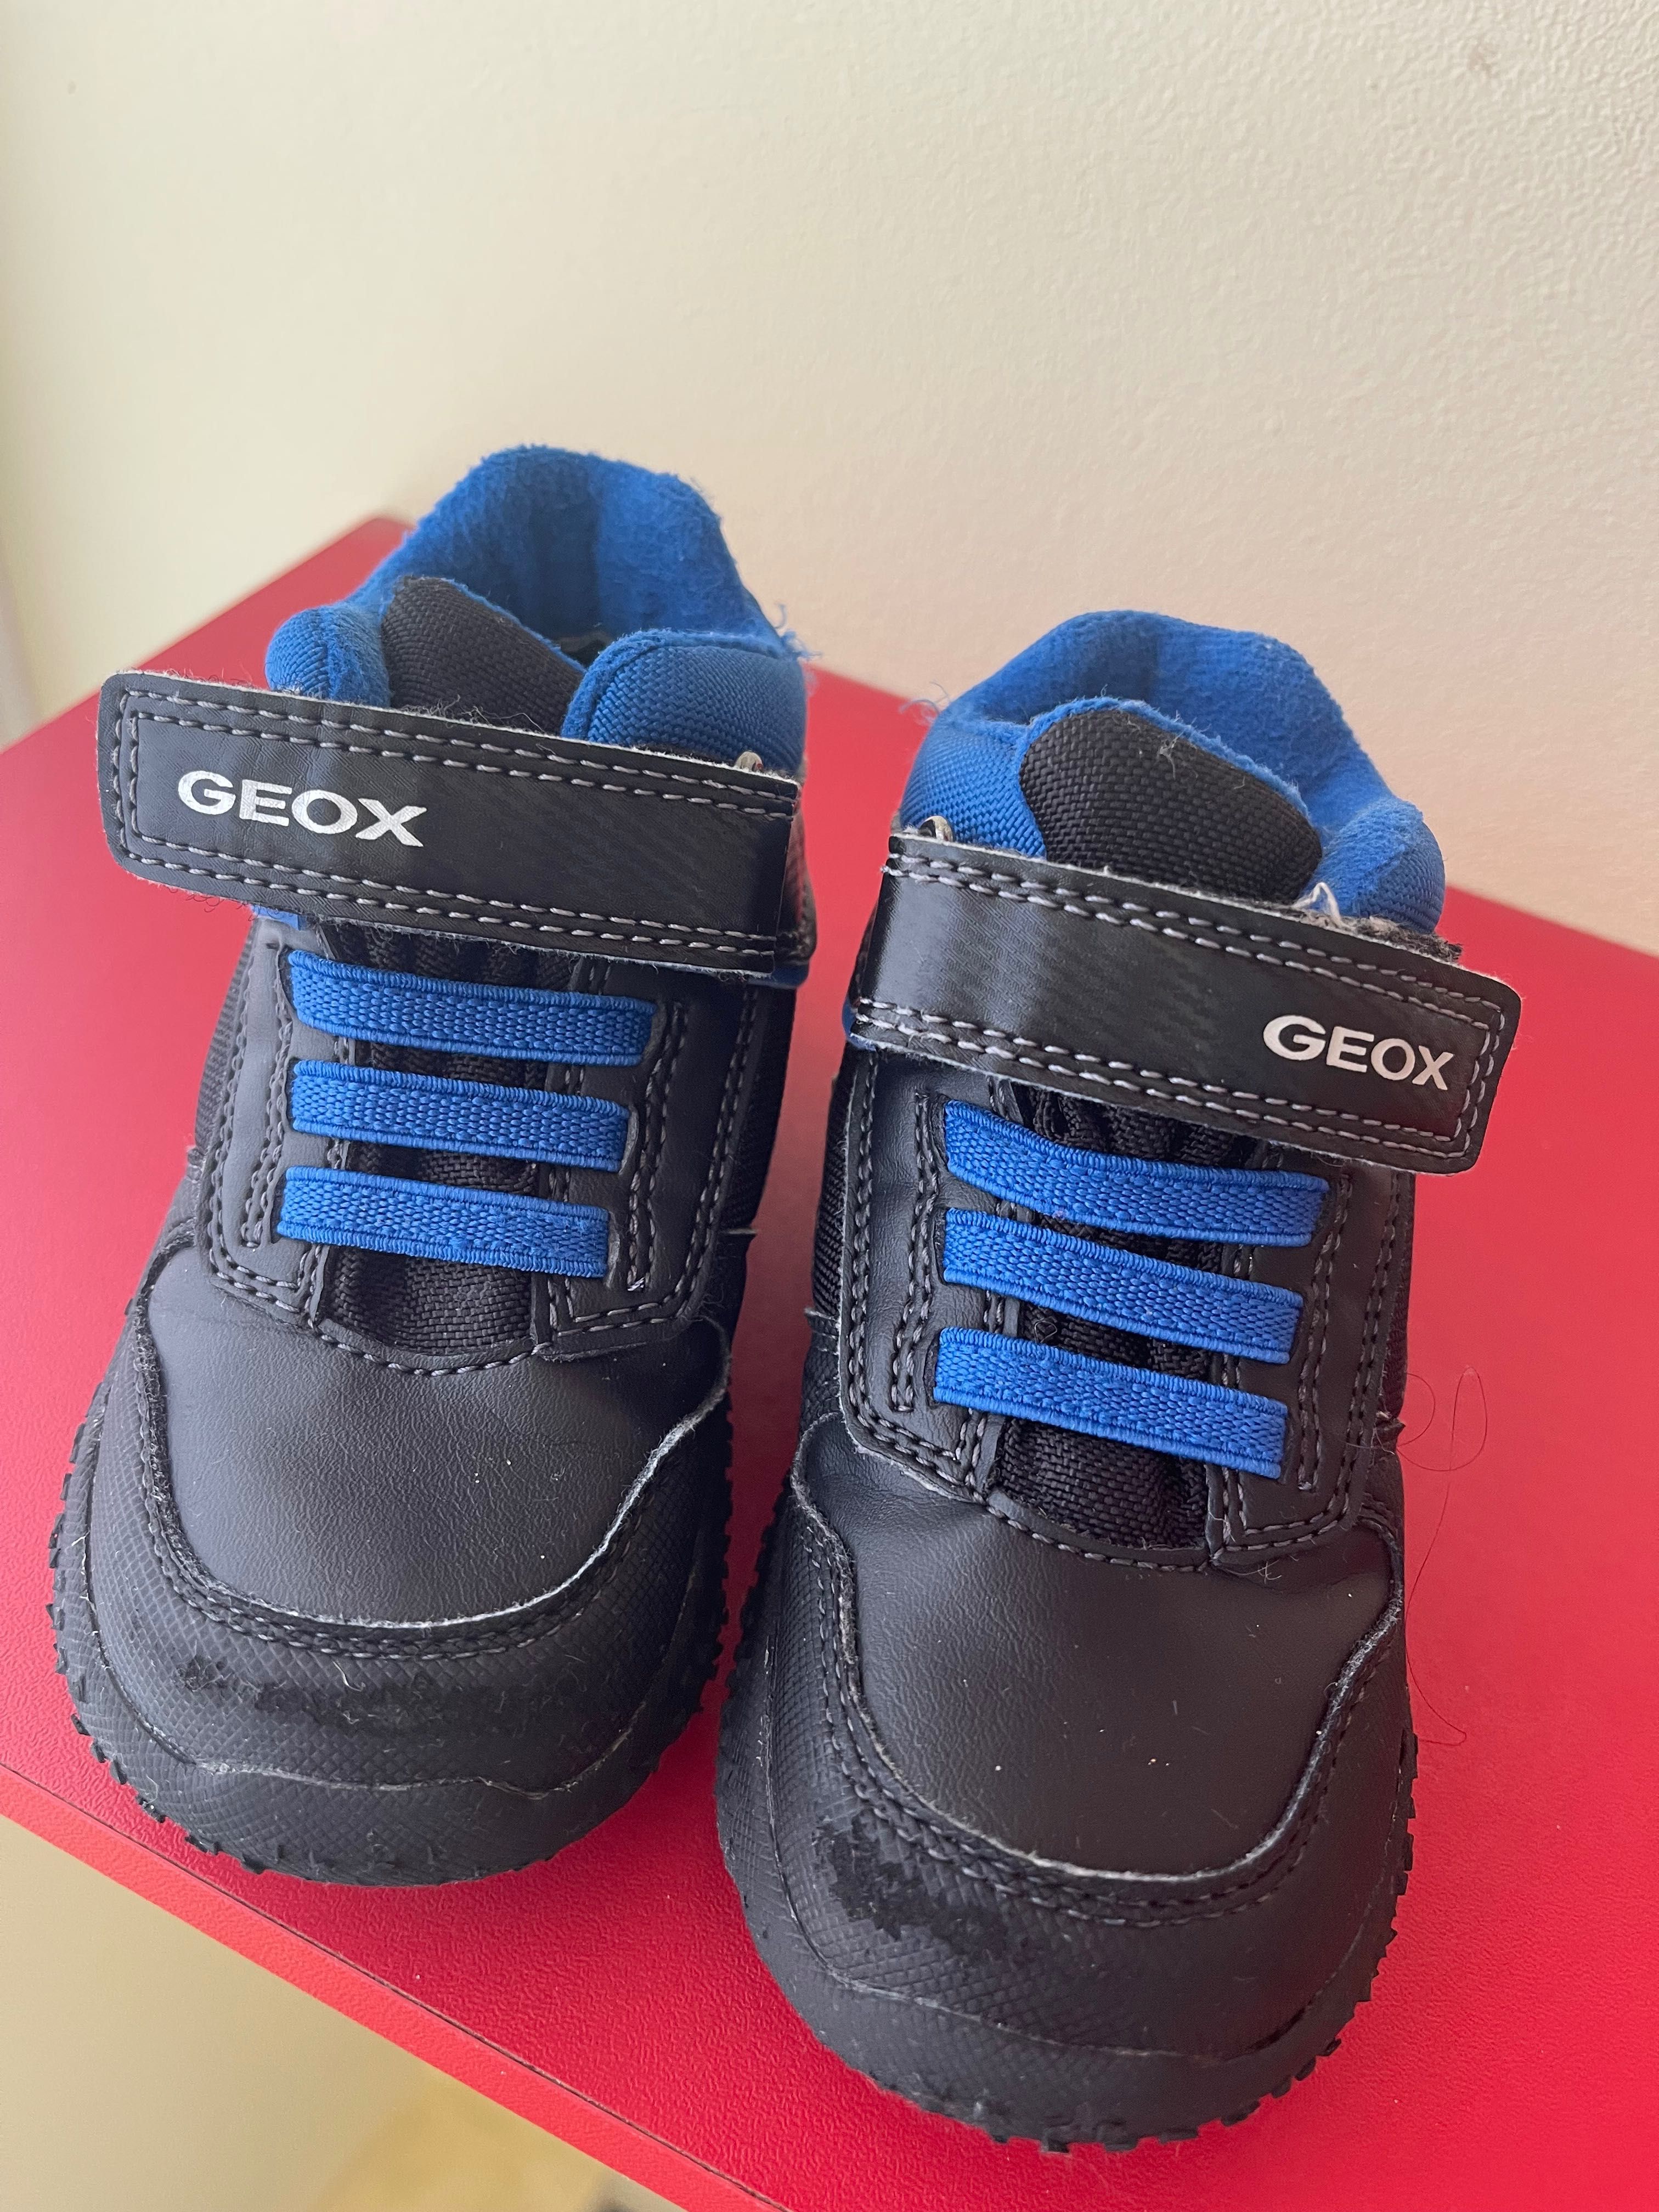 Ботинки детские Geox